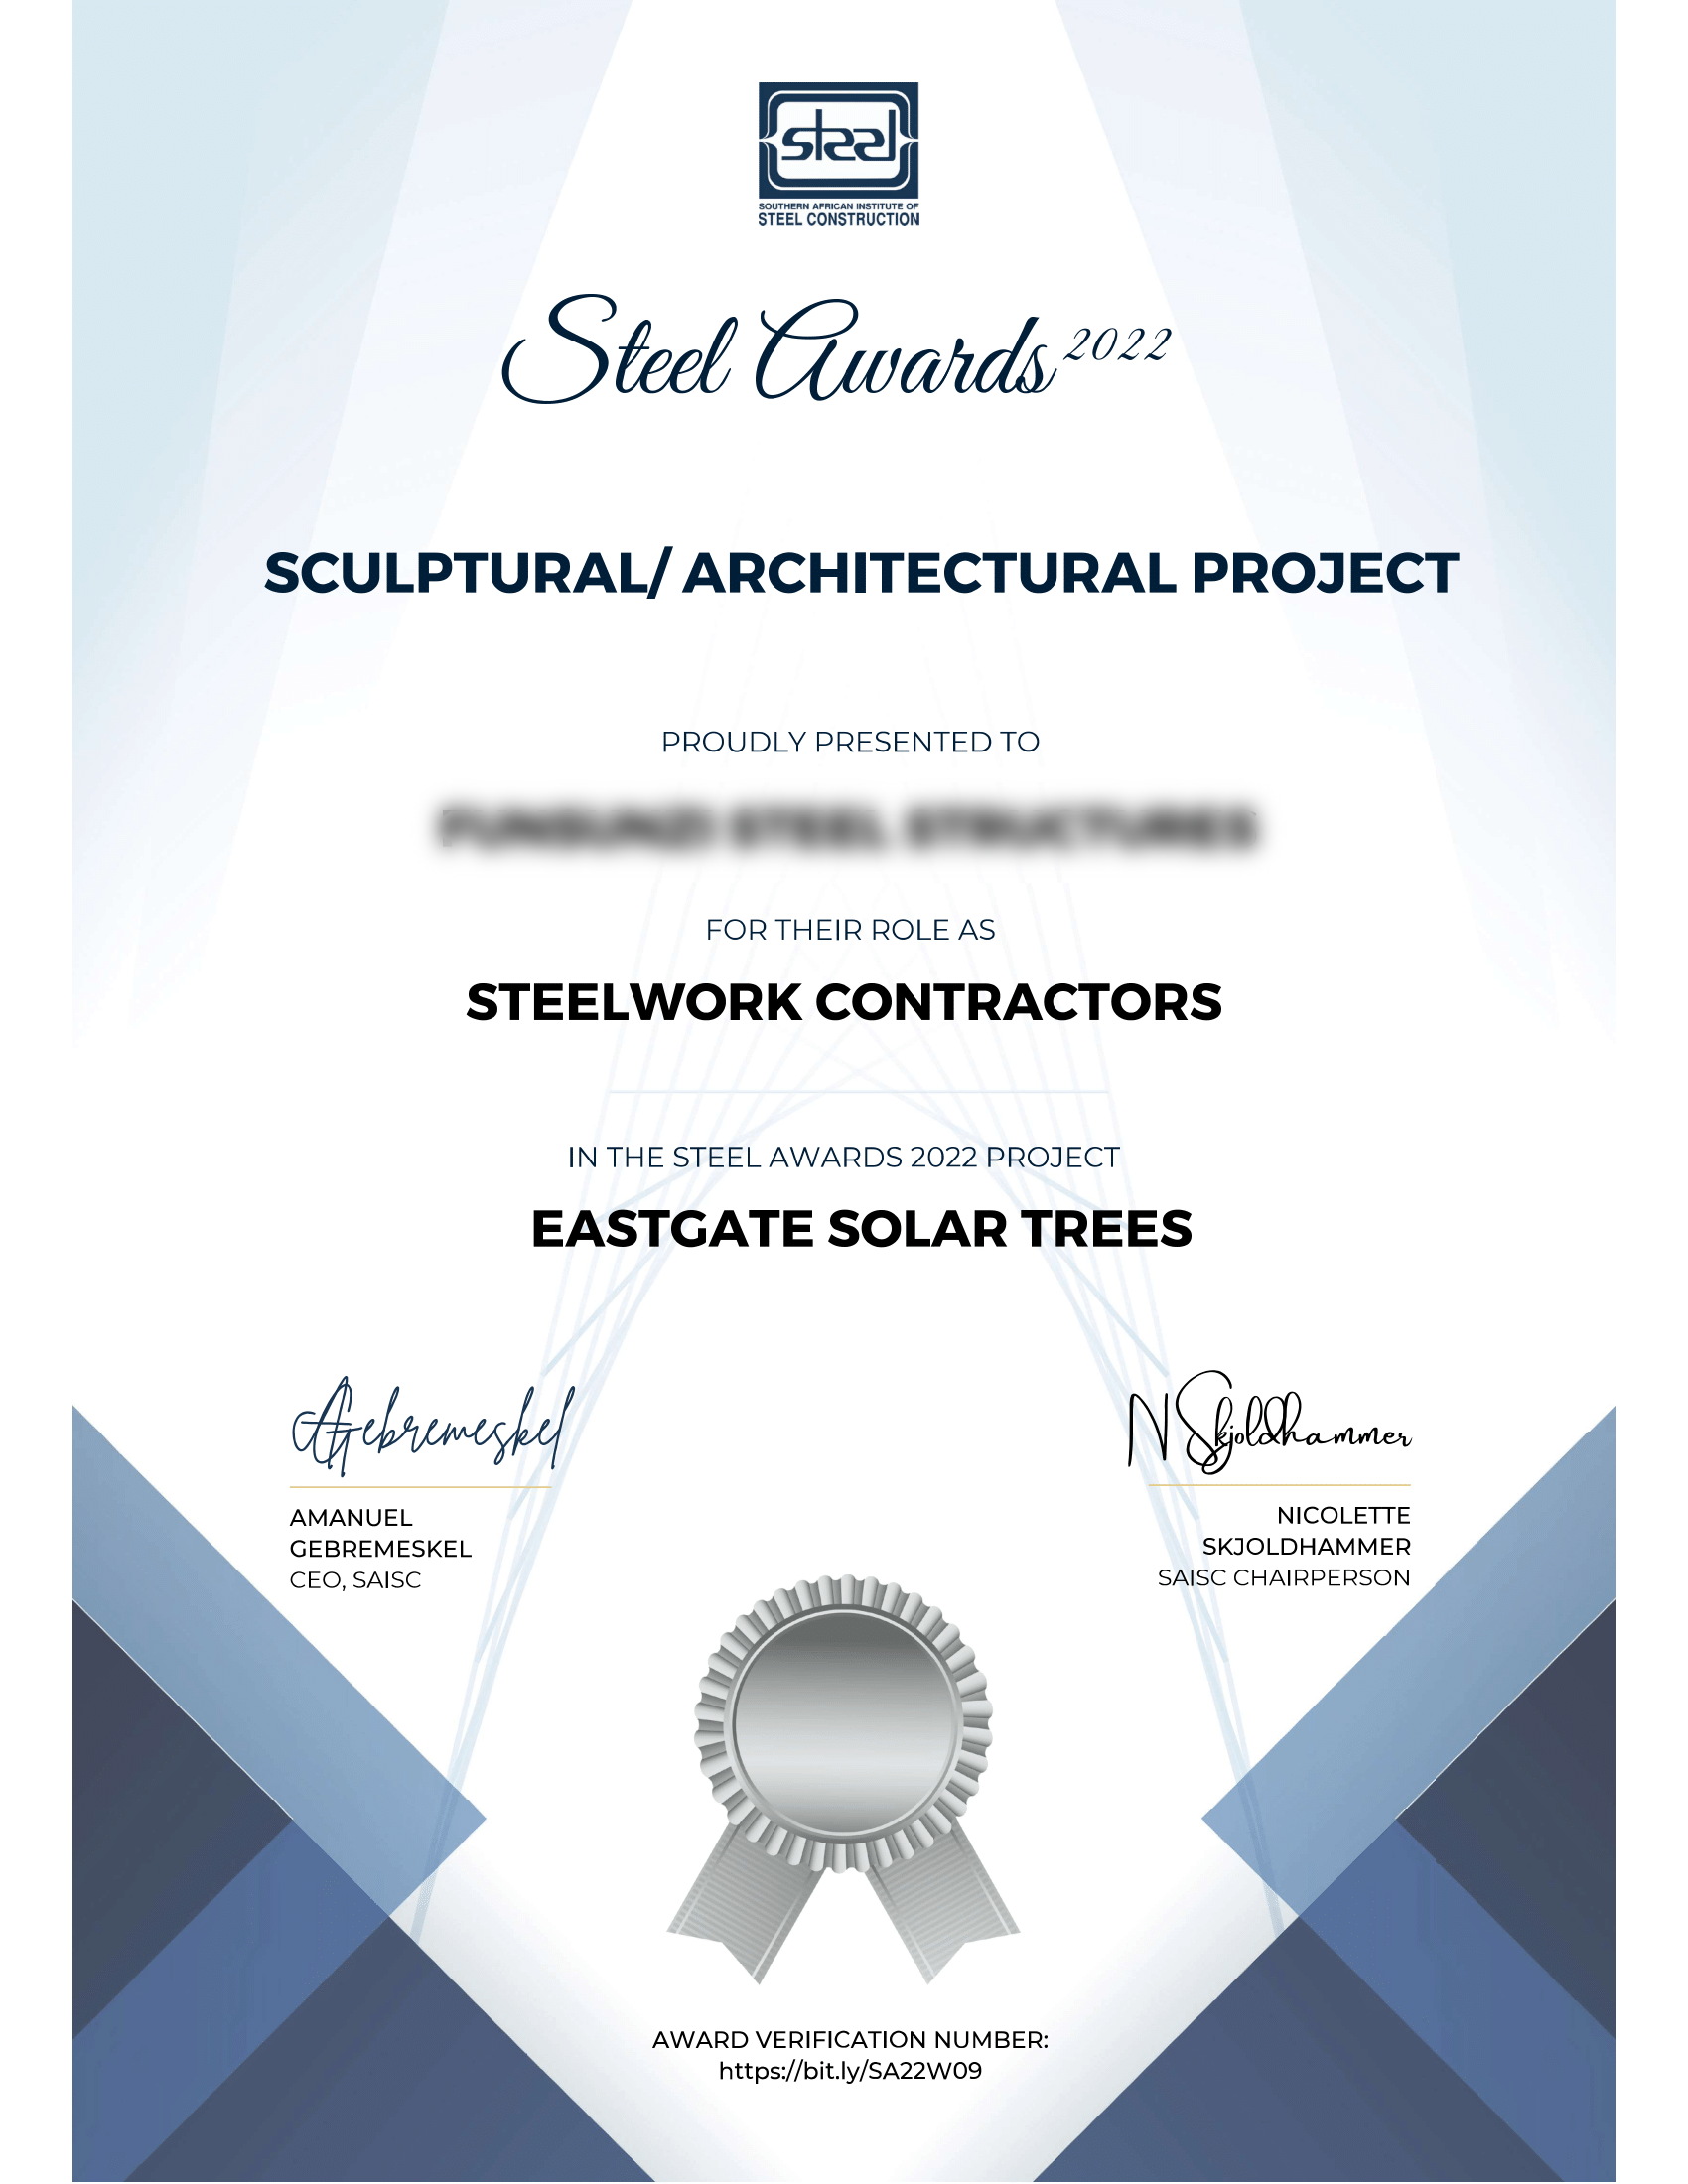 Steel Awards 2022 Certificate.-1